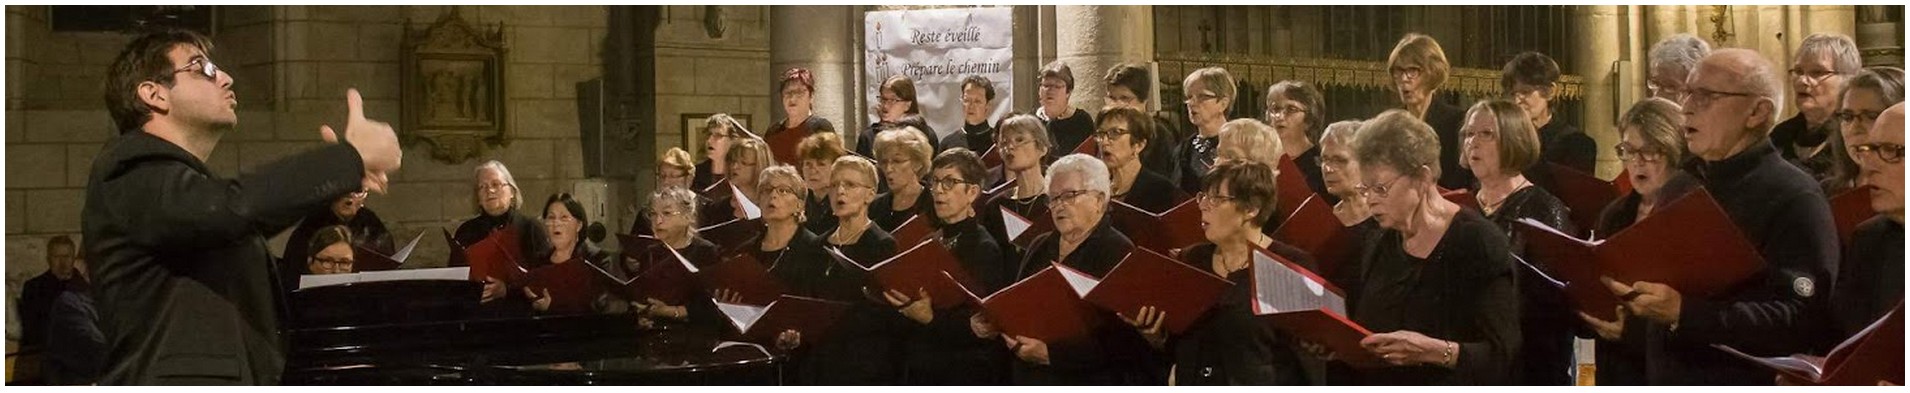 Ensemble Vocal ChanteLoire Choeur Amboise